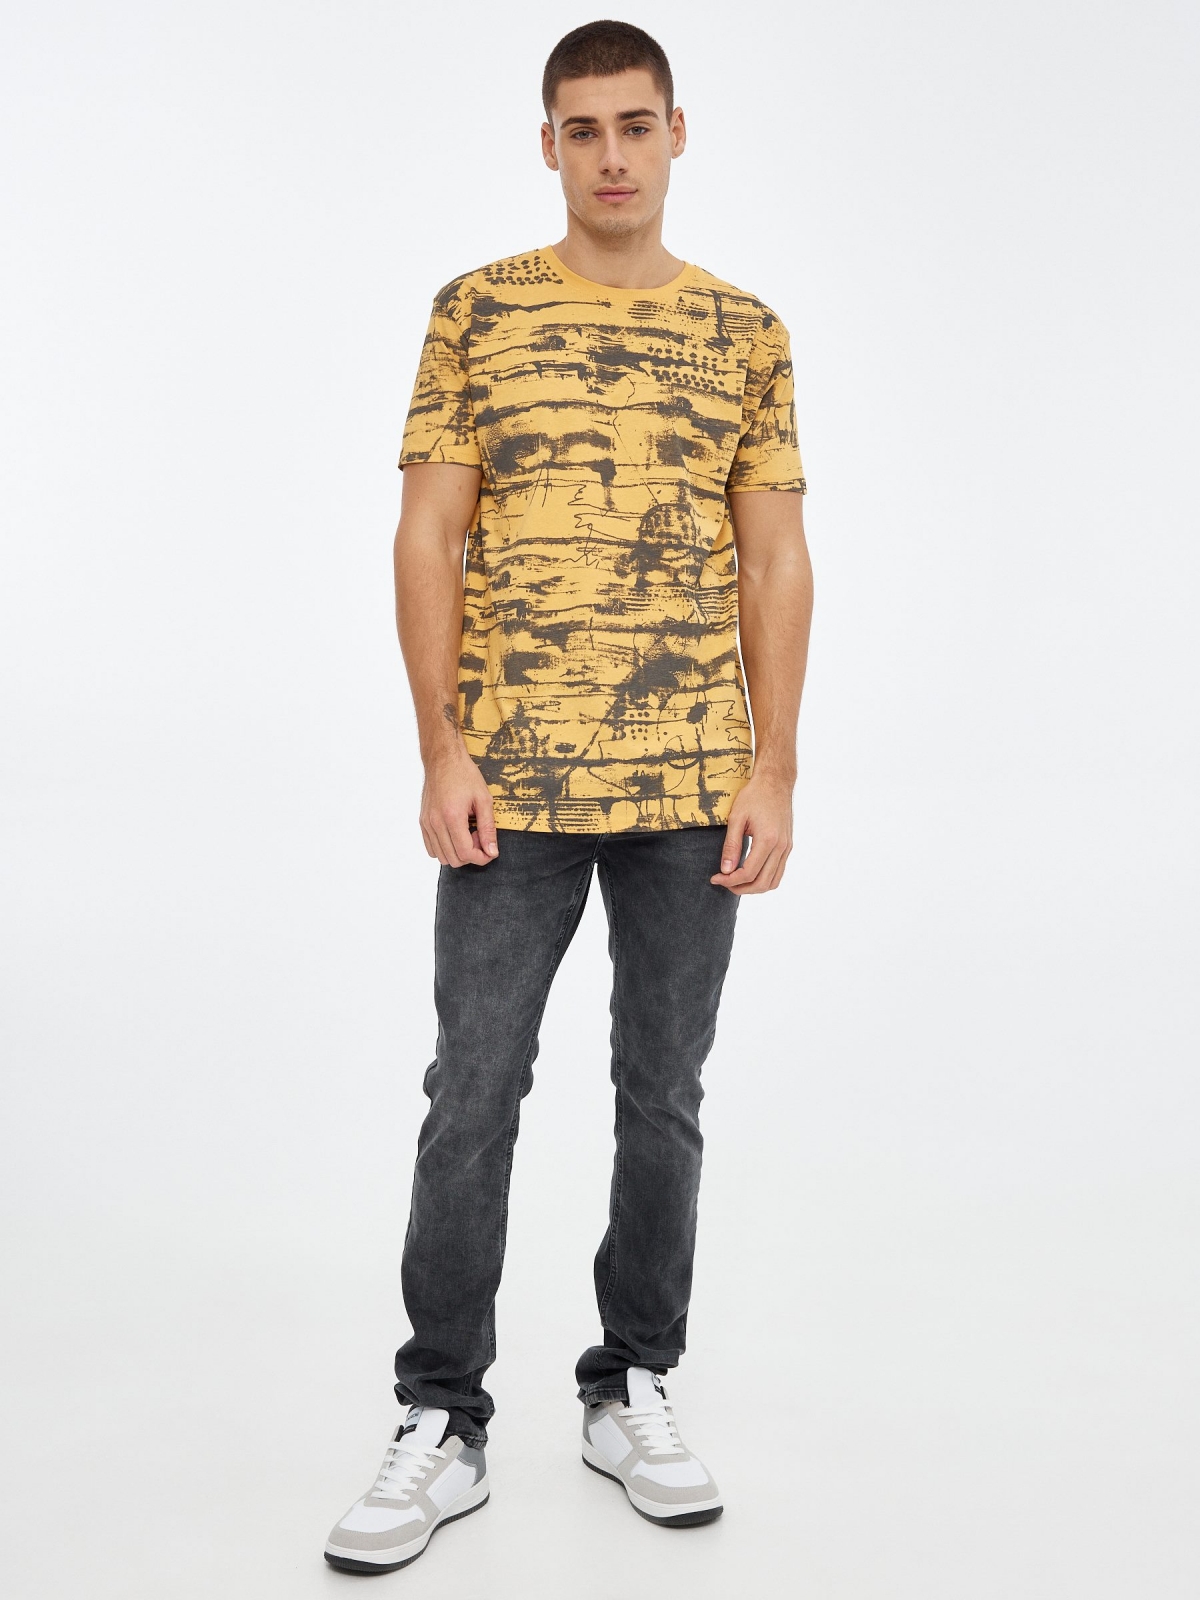 T-shirt de impressão total amarelo pastel vista geral frontal